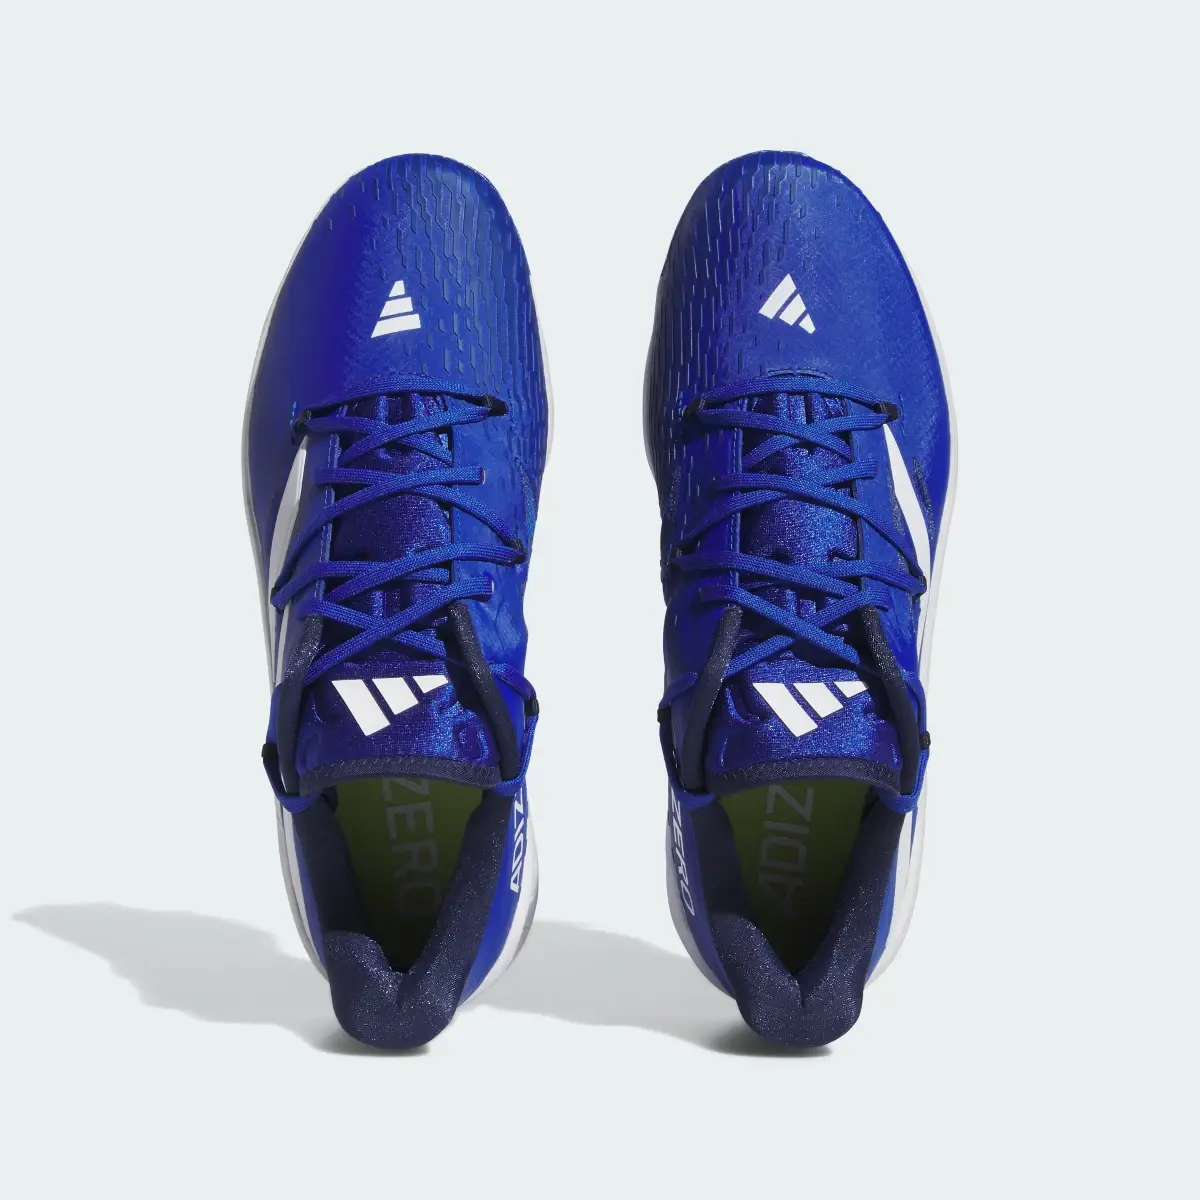 Adidas Adizero Afterburner 9 Cleats. 3